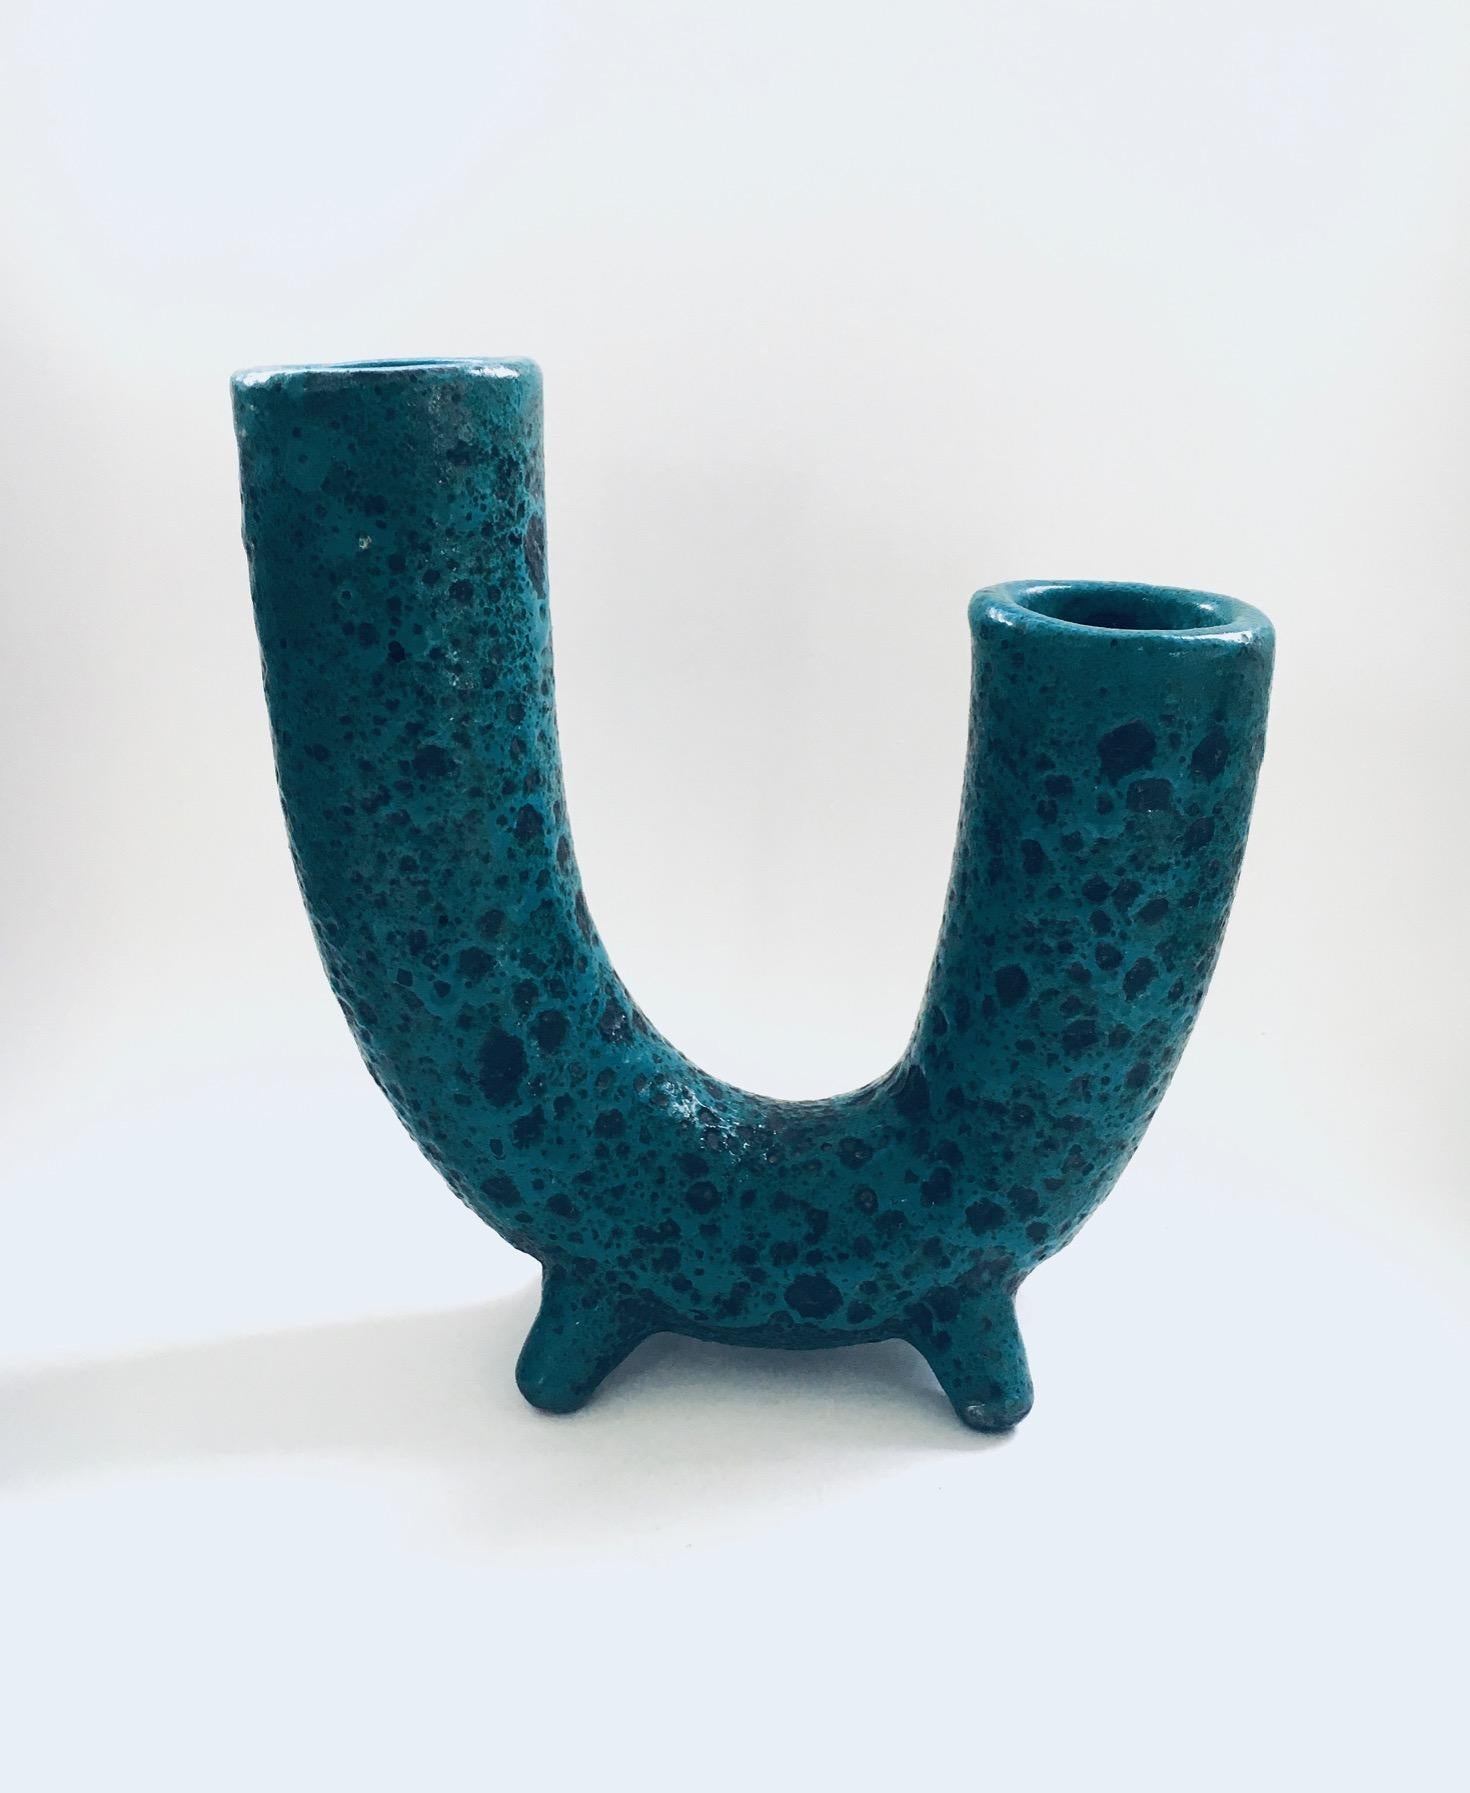 Vintage Midcentury Brutalist in Design Art Pottery Studio Horn Spout Modell Fat Lava Vase. Hergestellt in Belgien, 1960er Jahre. Türkisblaue fette Lavaglasur über schwarzer matter Glasur. Keine Markierungen. Tolle Form, in sehr gutem Zustand. Maße: